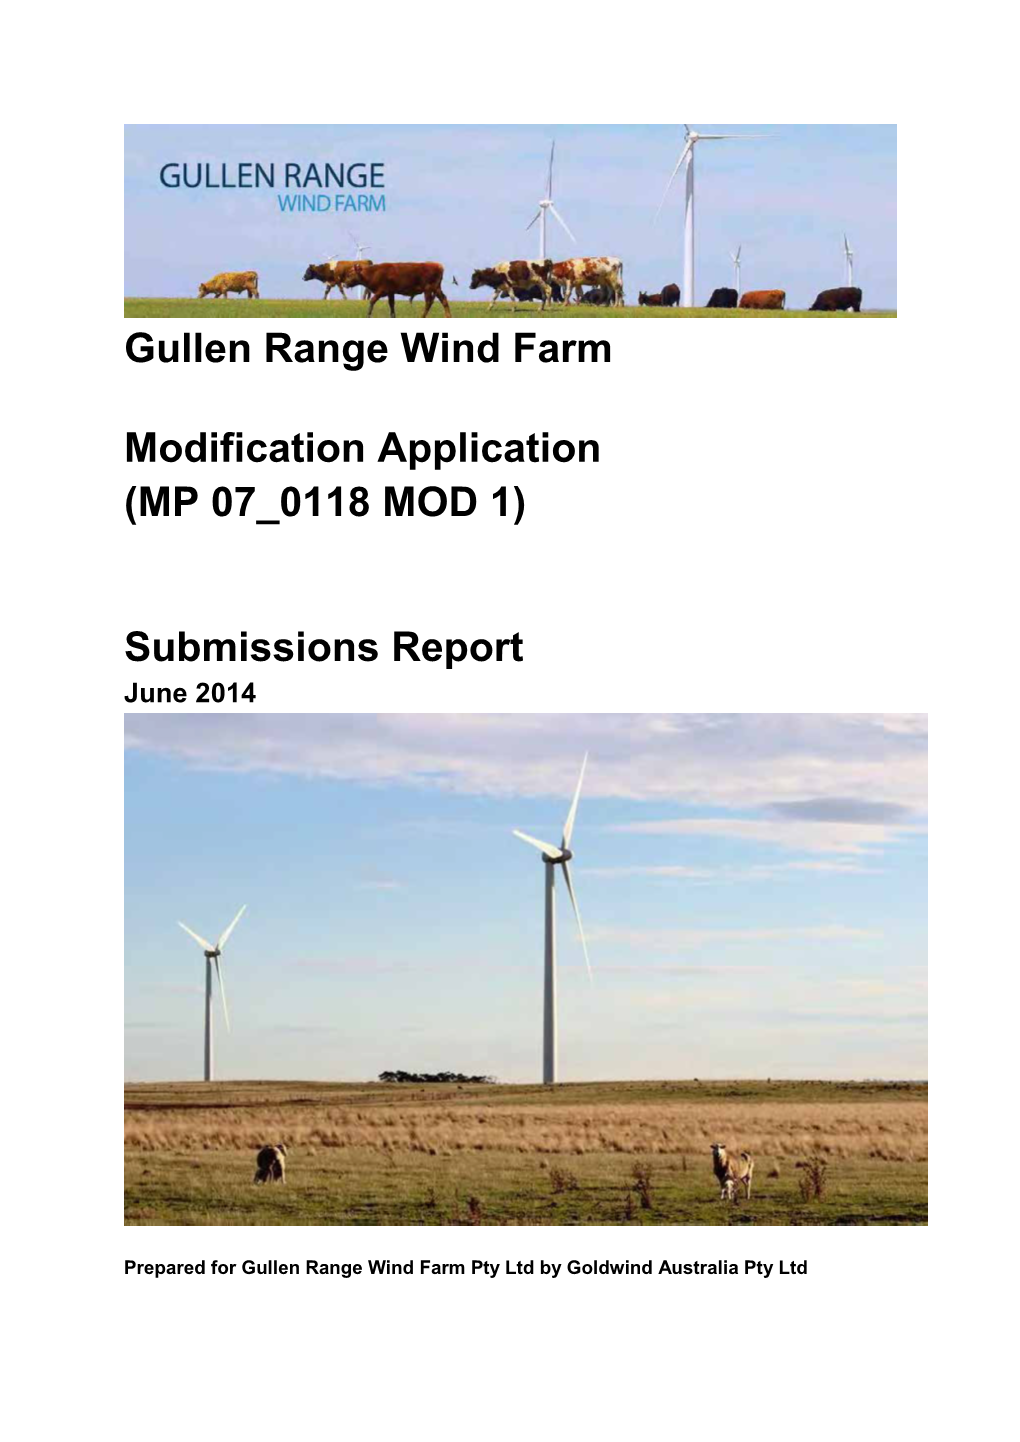 Gullen Range Wind Farm Modification Application (MP 07 0118 MOD 1) Submissions Report